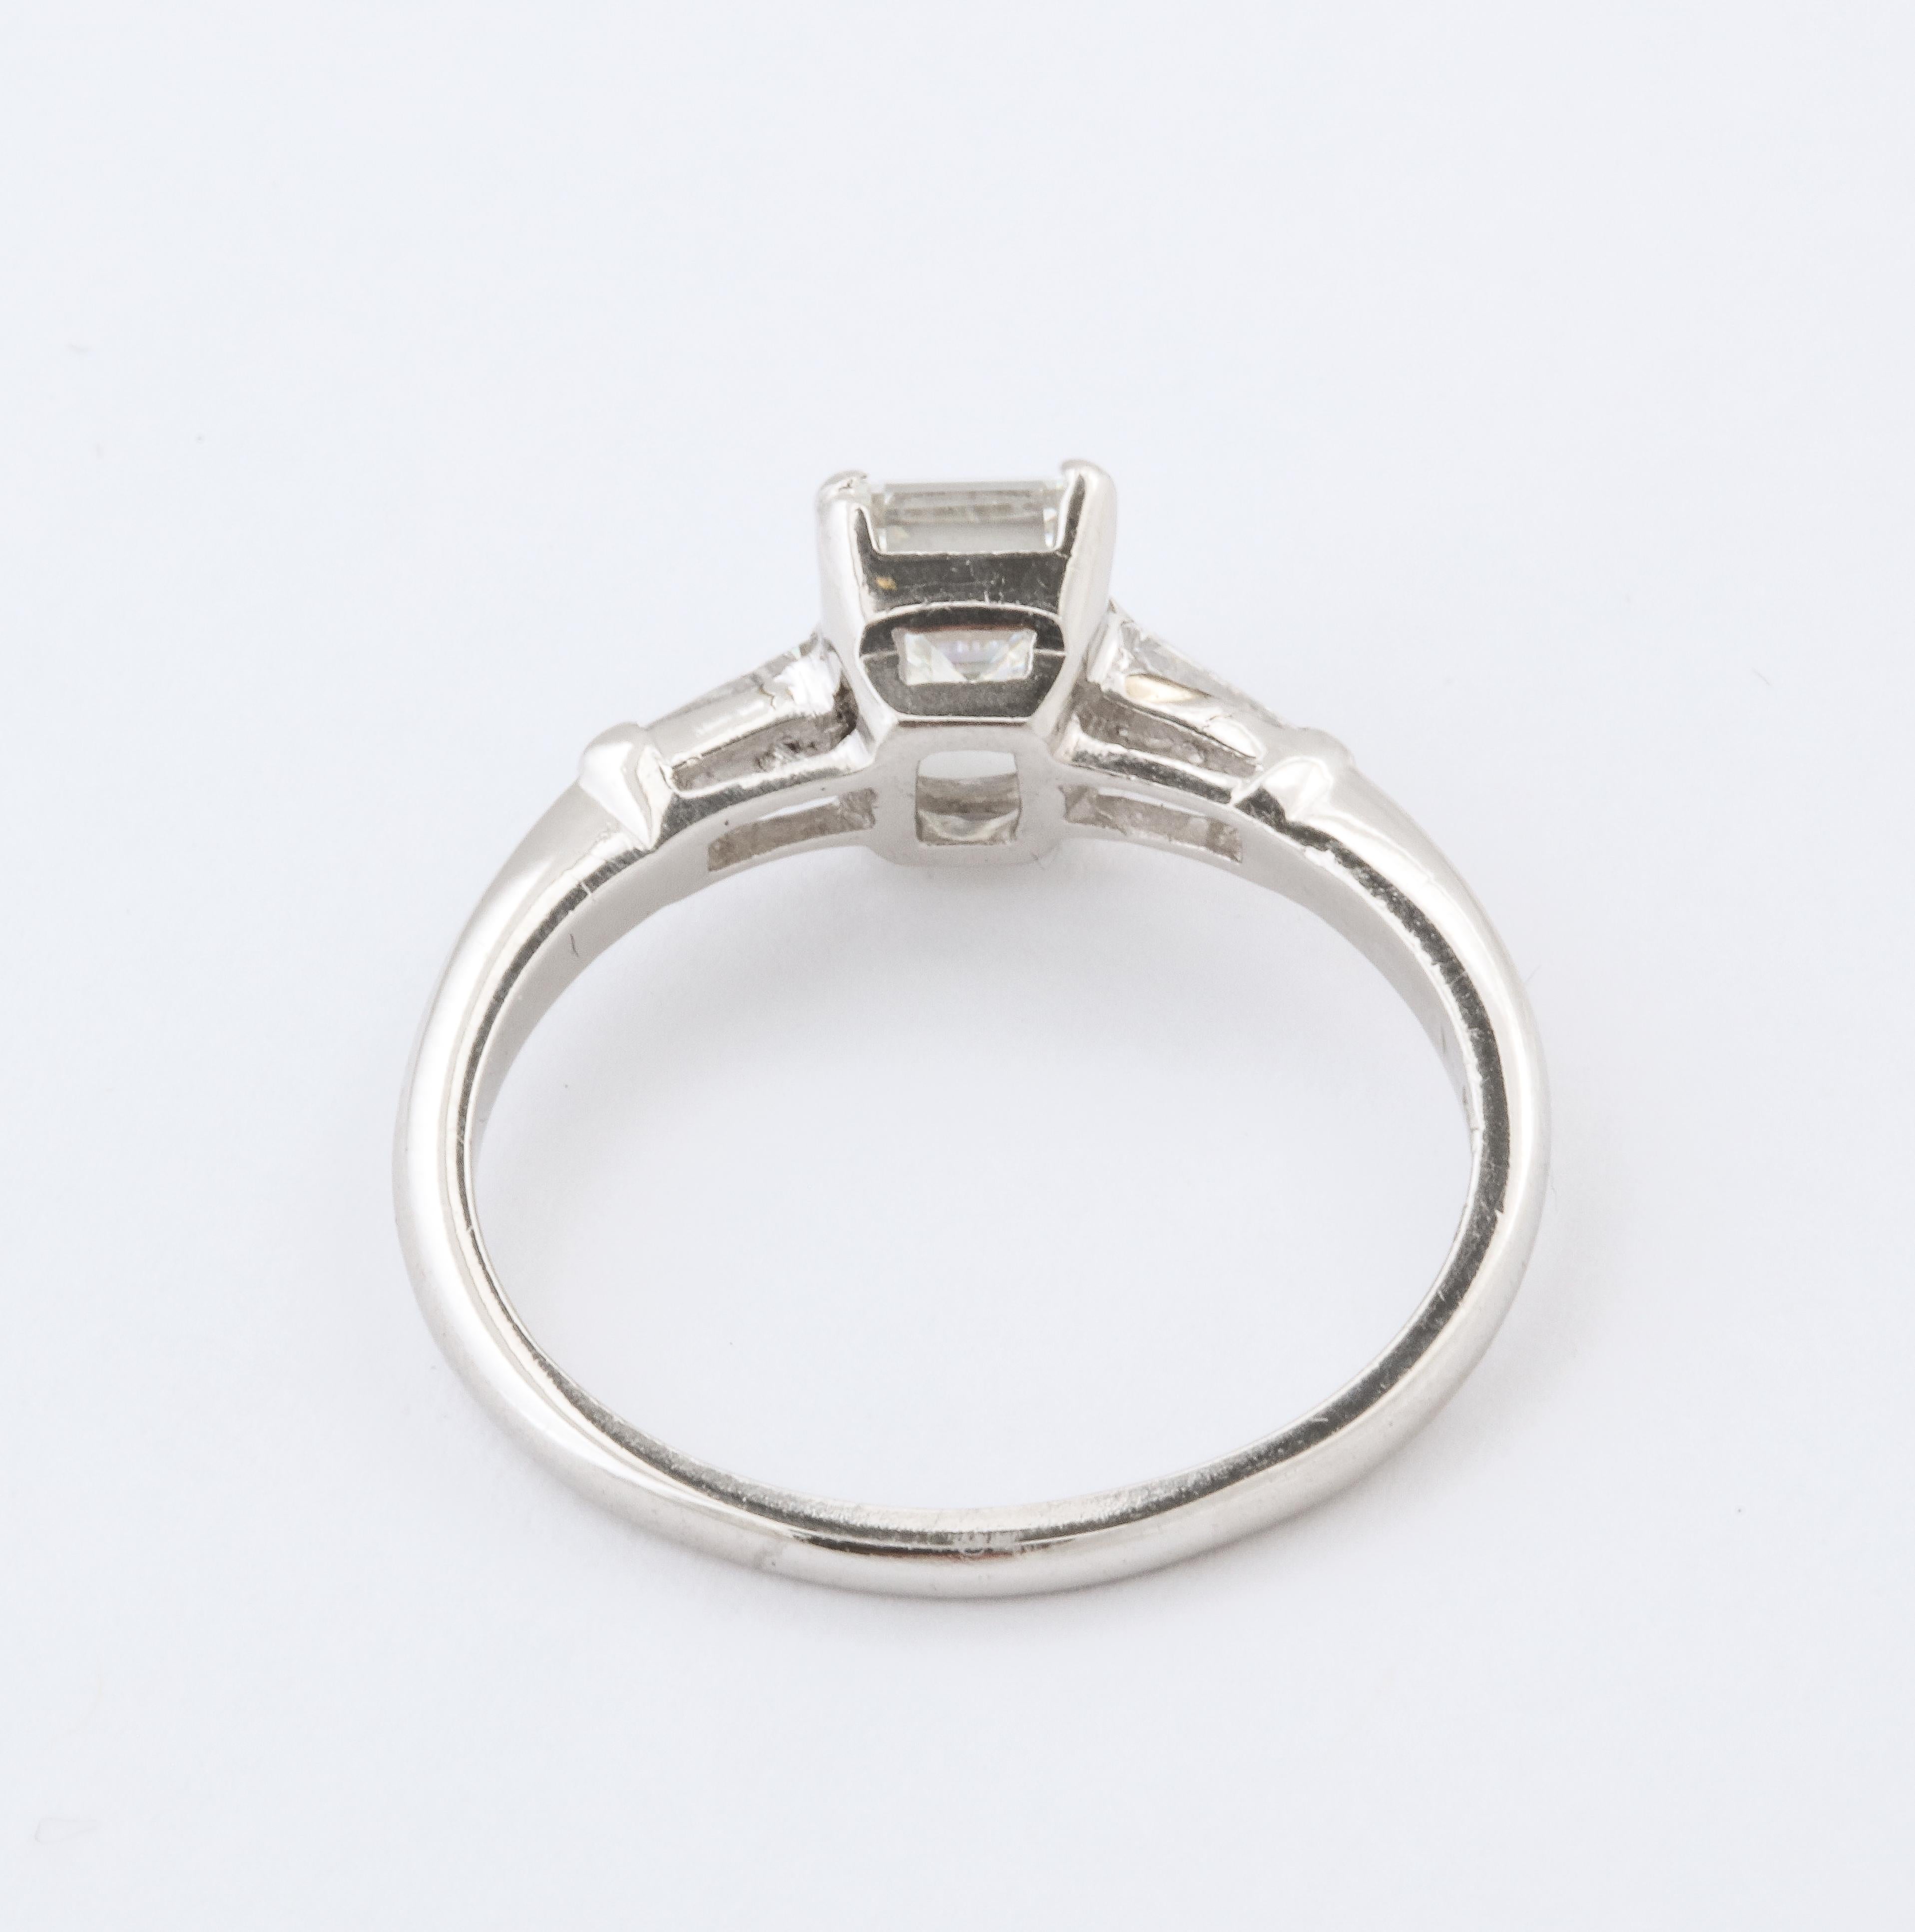 Art Deco Emerald Cut 1.07carat Diamond Engagement Ring with Baguettes GIA cert For Sale 1